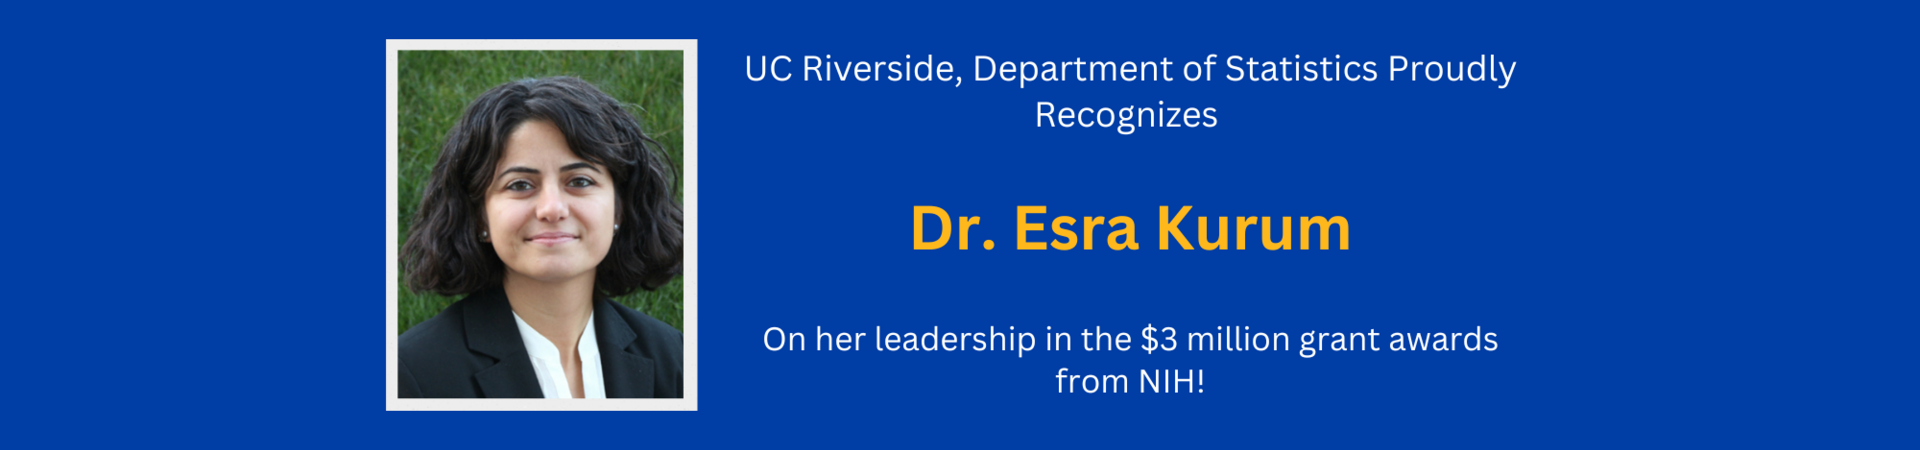 Esra Kurum proudly recognized for her leadership in 3 million grant awards from NIH